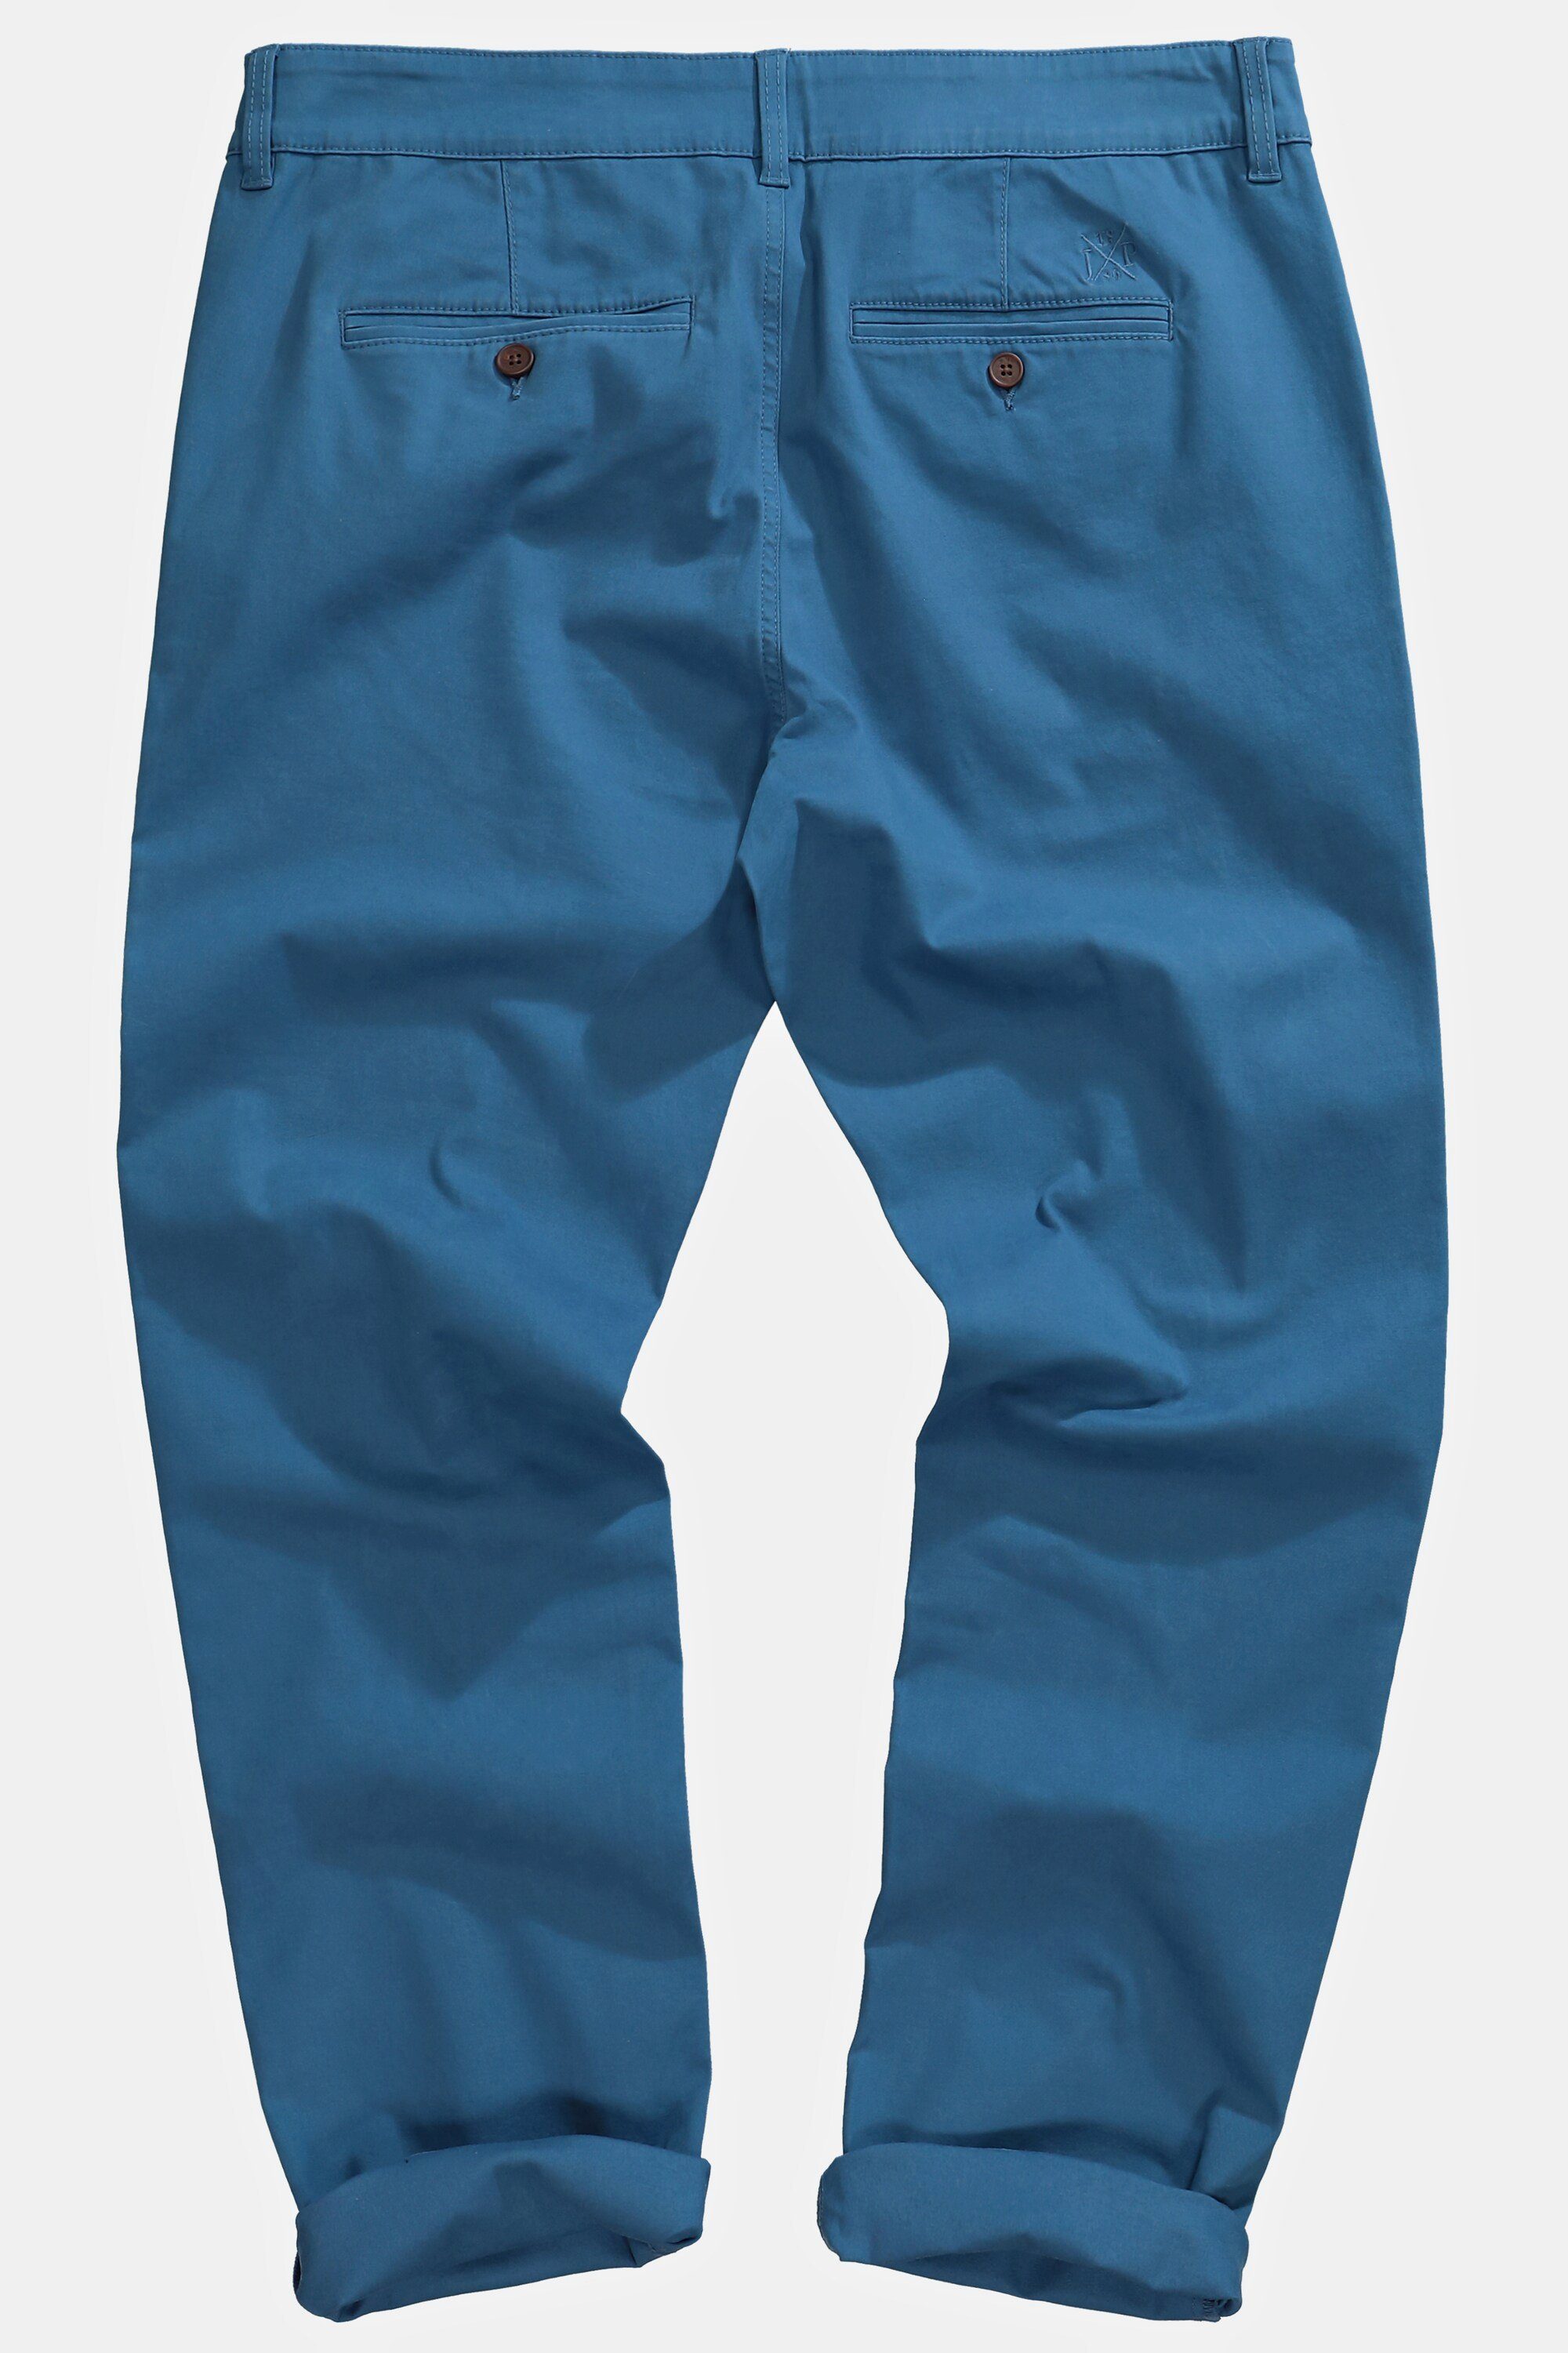 JP1880 Chinohose Chino Hose blue FLEXNAMIC® 4-Pocket Bauch Fit denim